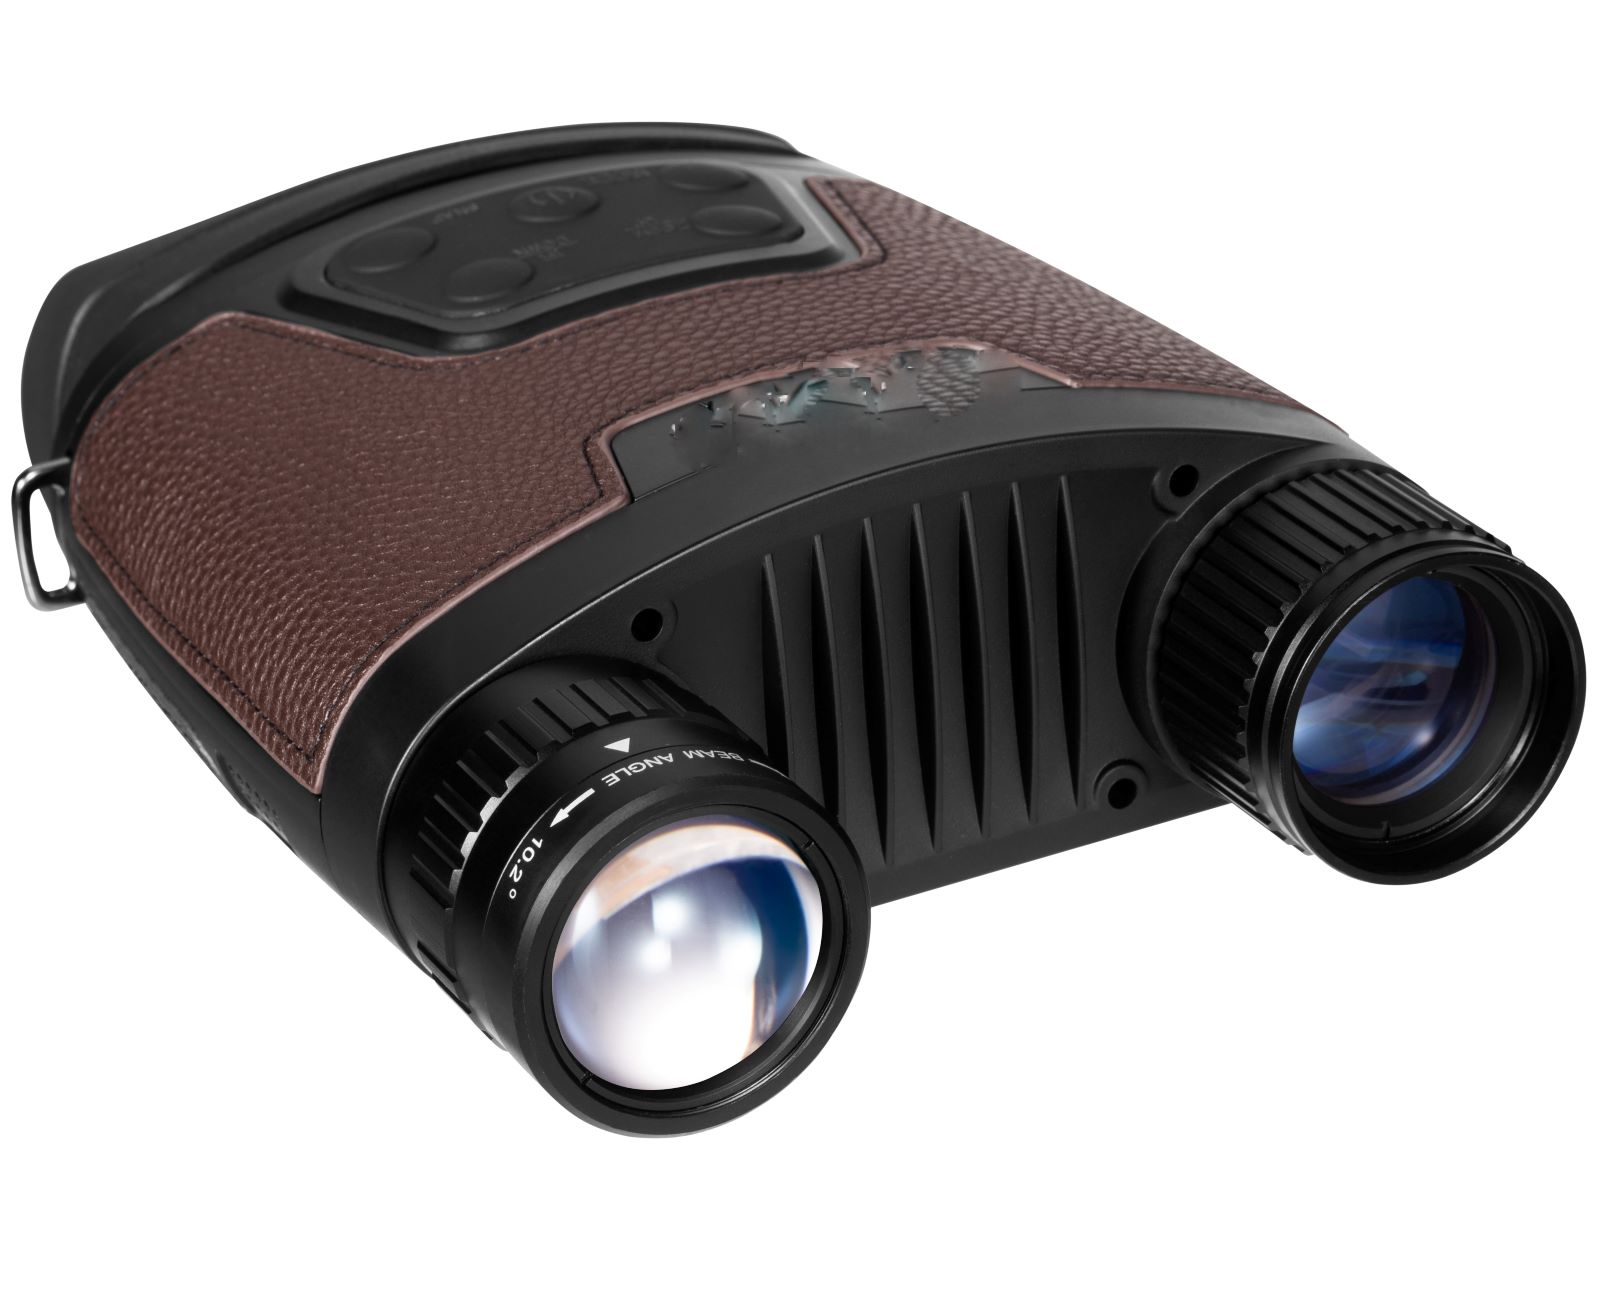 NV380 IR laser night vision scope